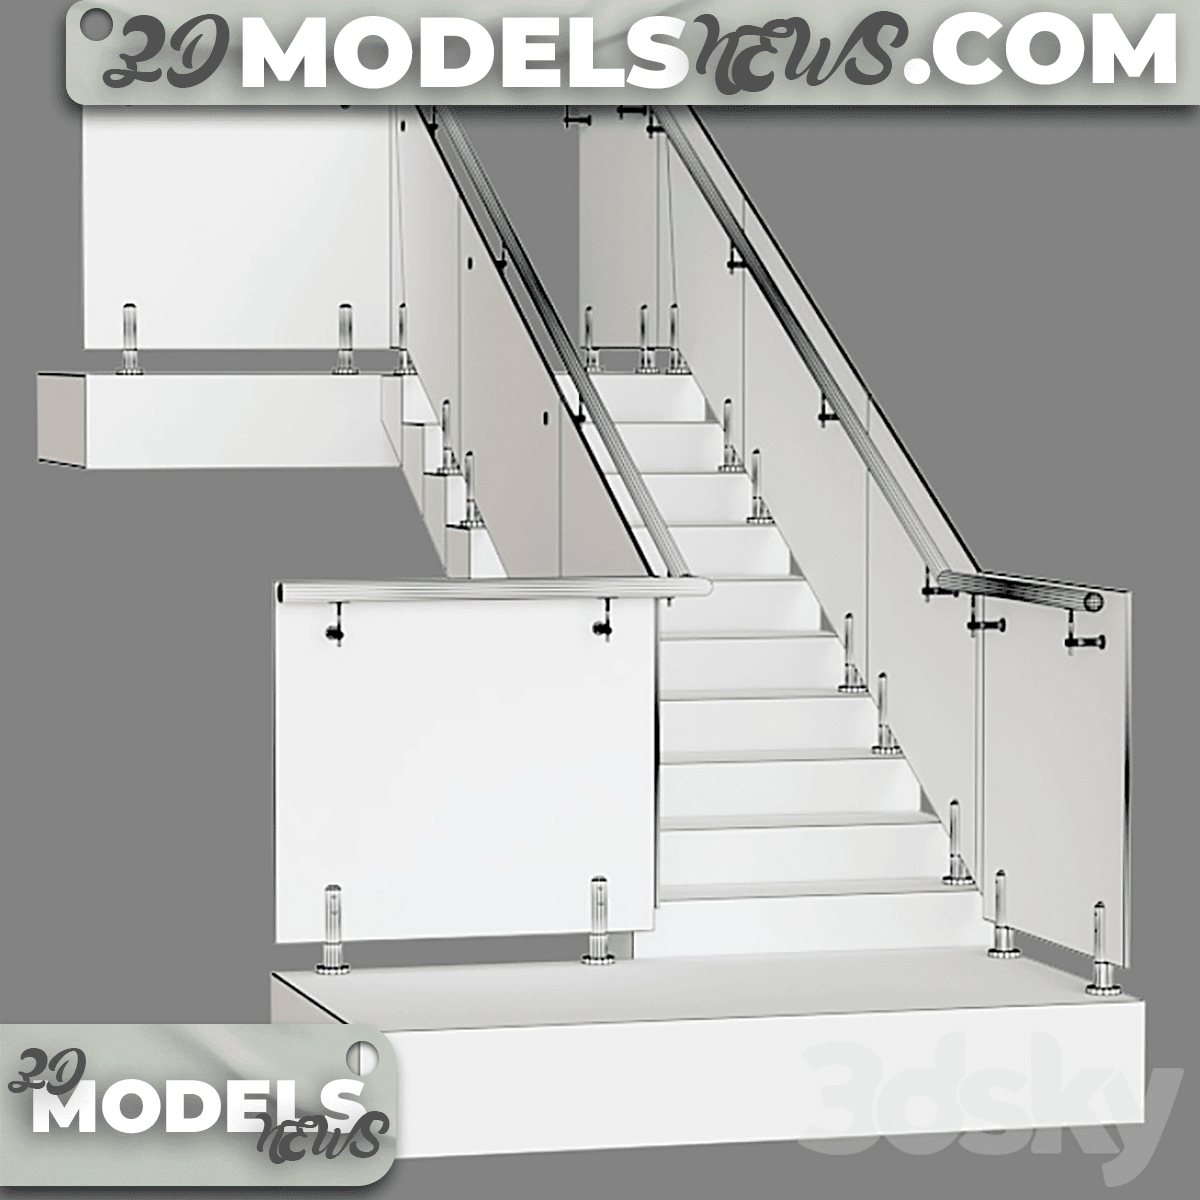 Glass railing model on mini racks 4 2